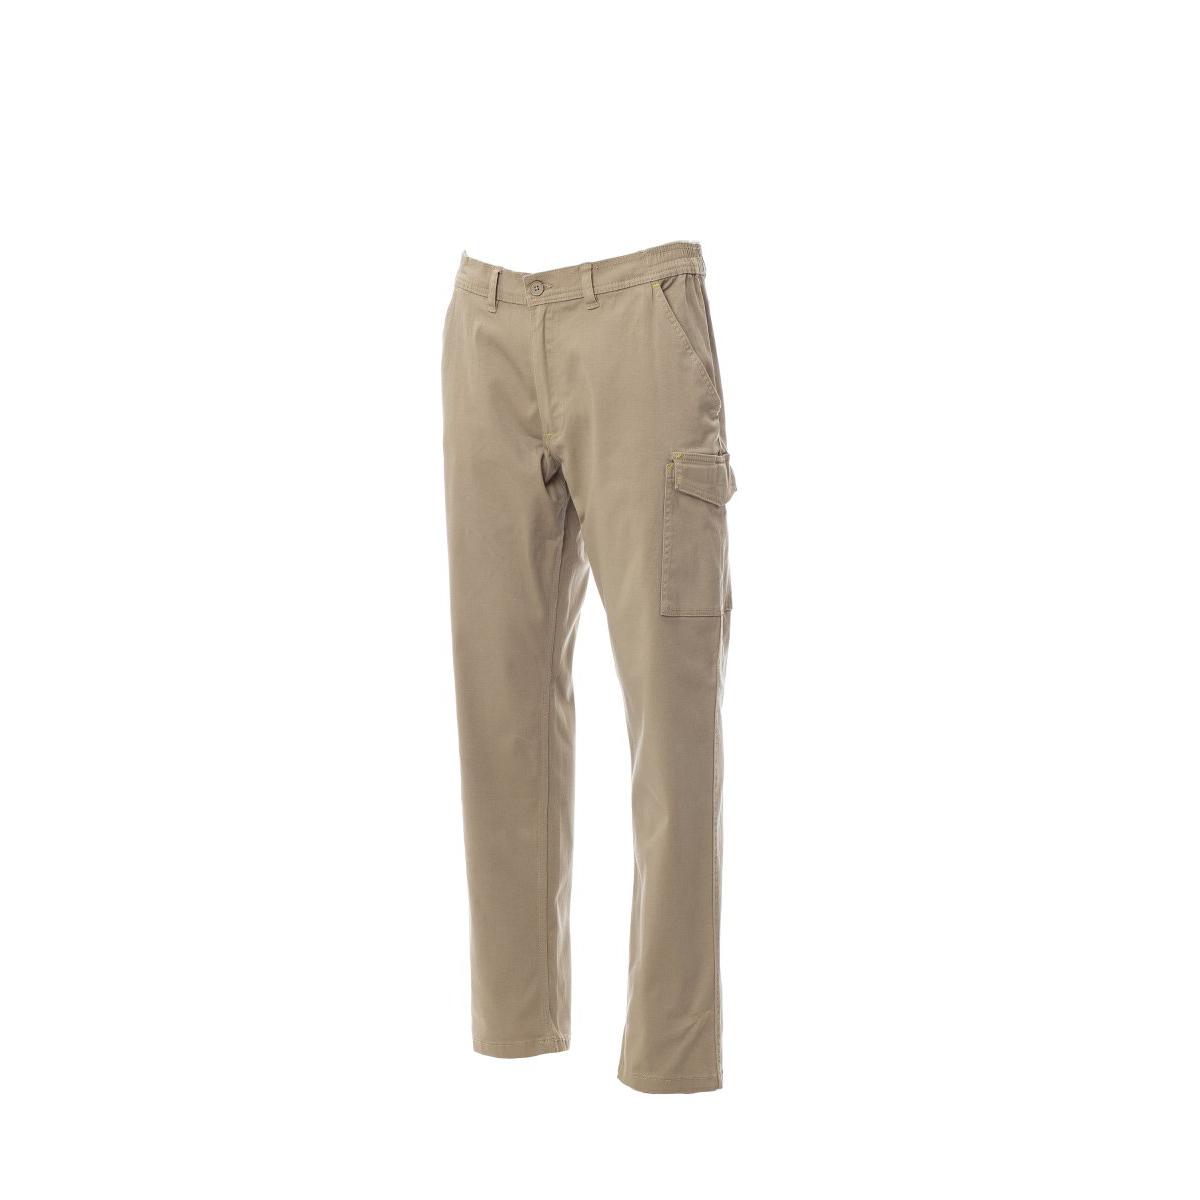 Pantaloni Payper 001547 Power Stretch, tessuto elasticizzato